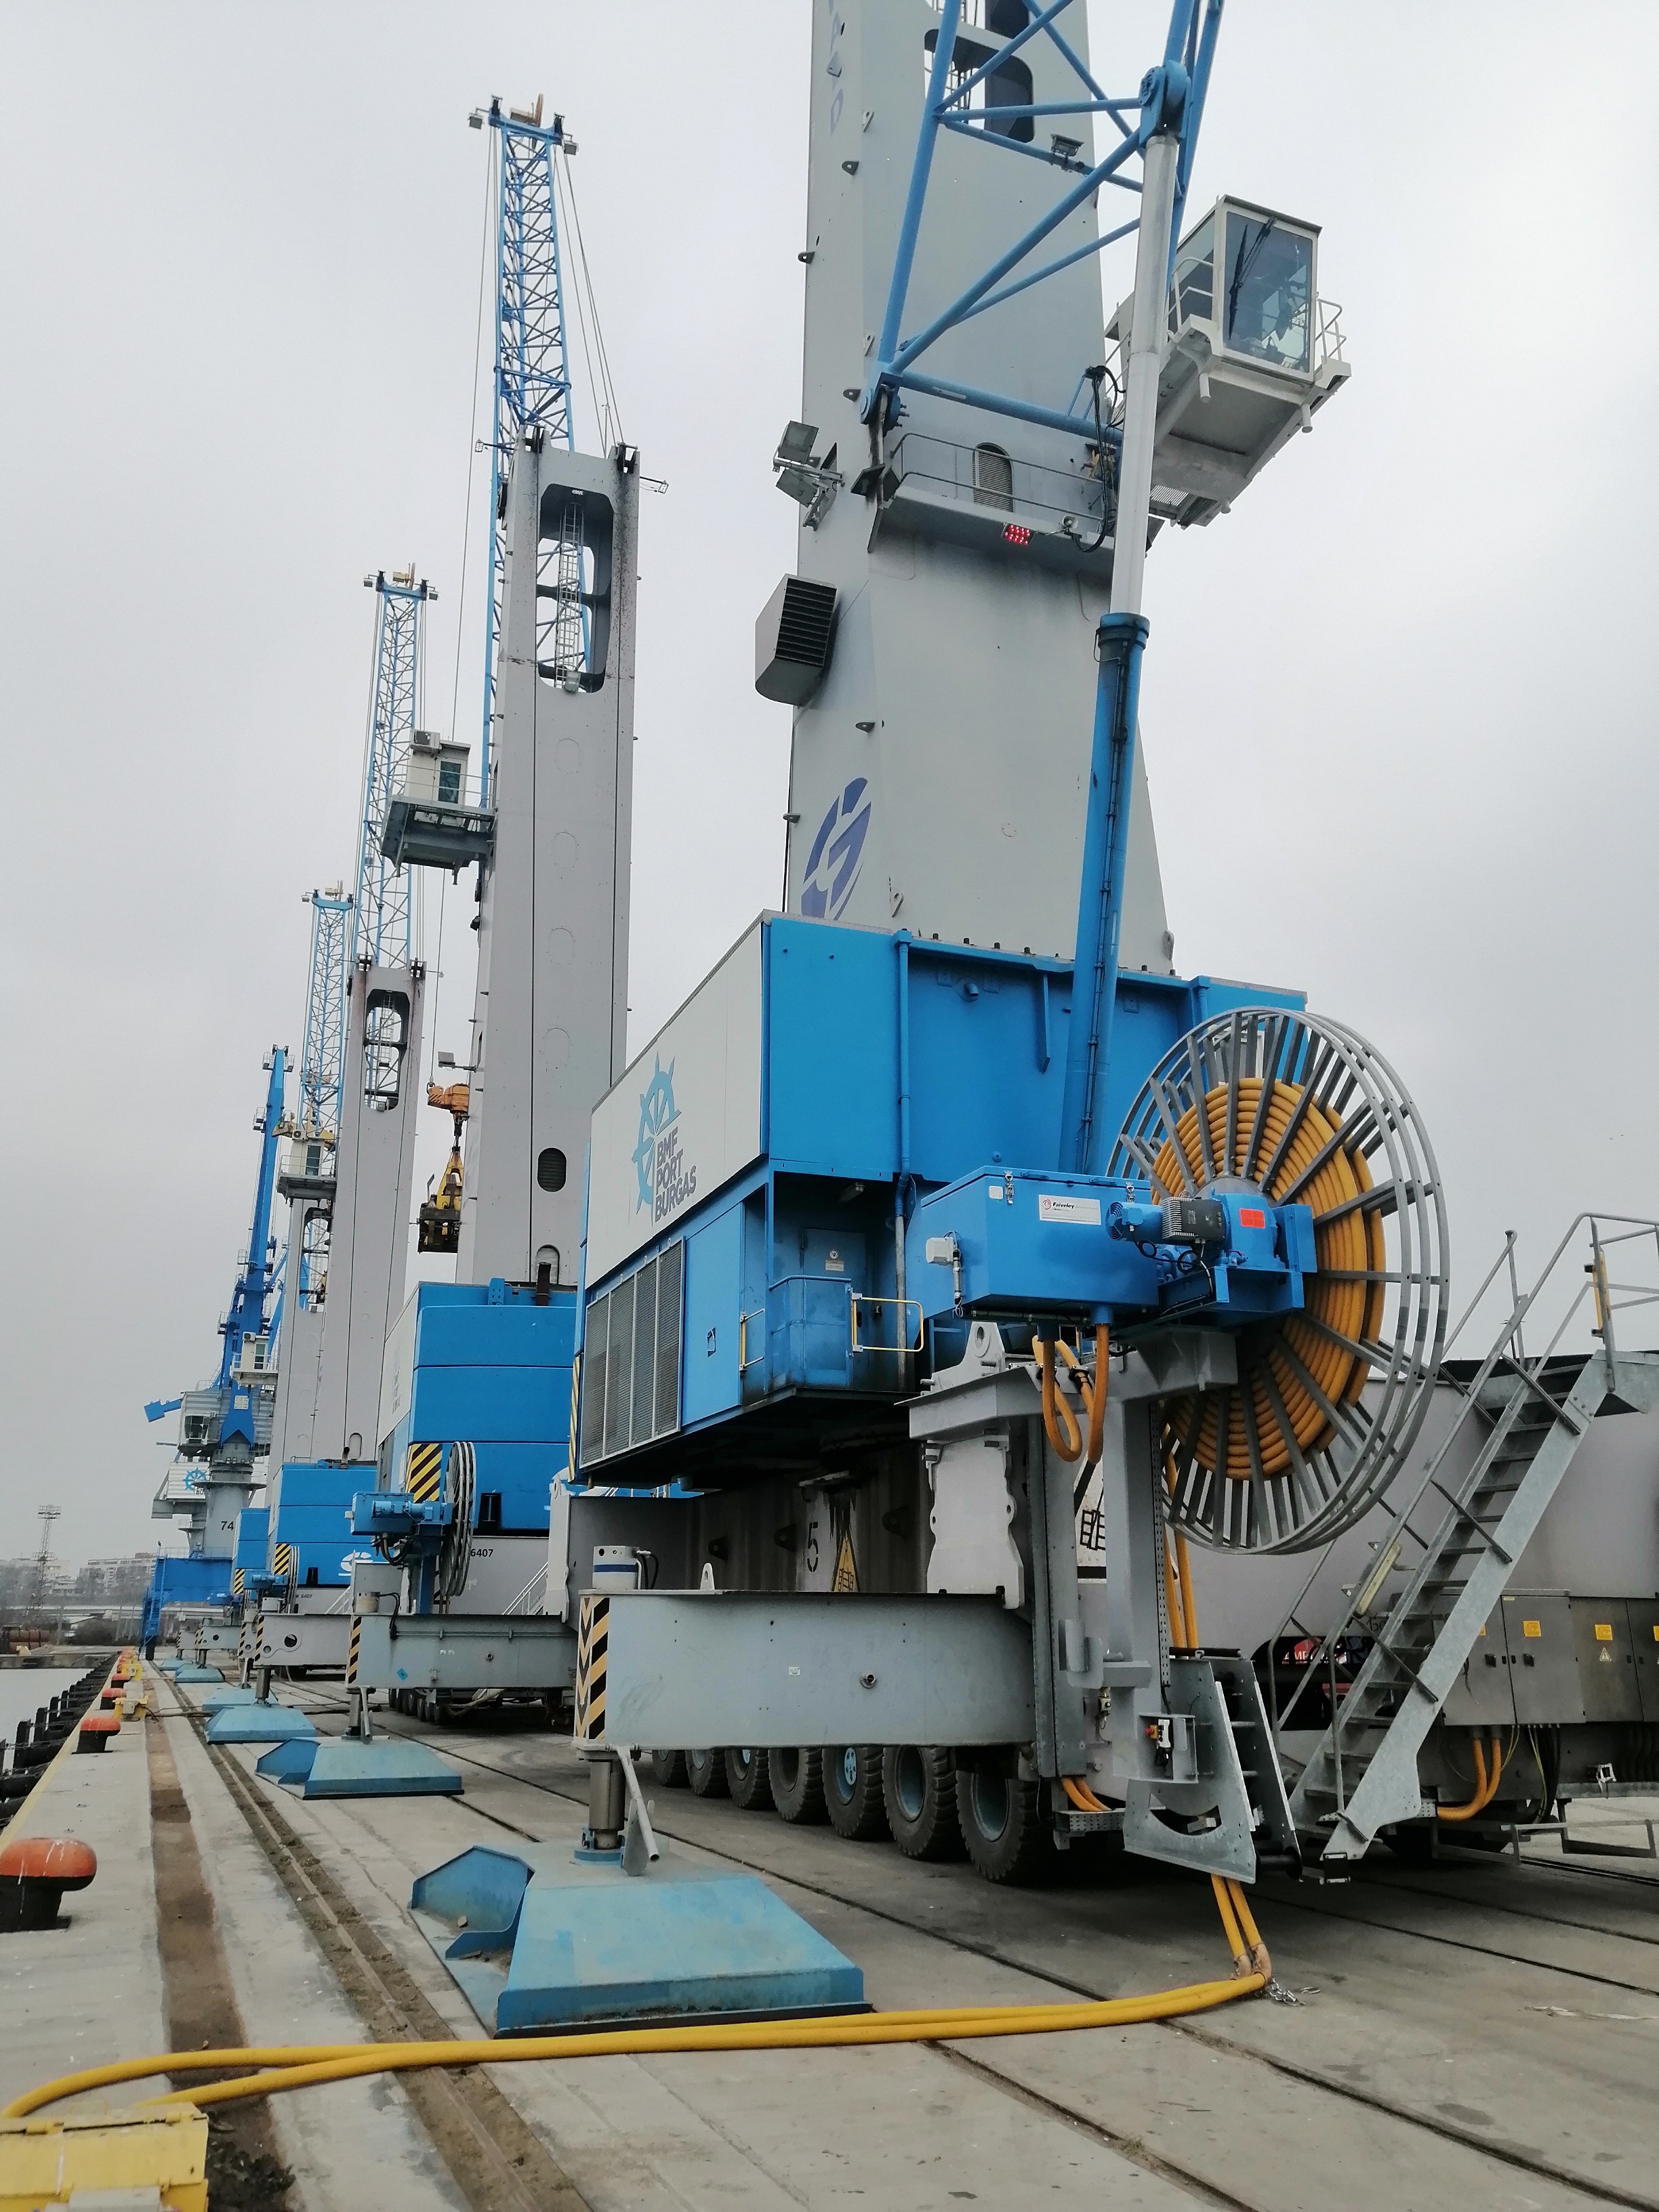 Konecranes electrifies 4 mobile harbor cranes with cable reel retrofits at  key Bulgarian port